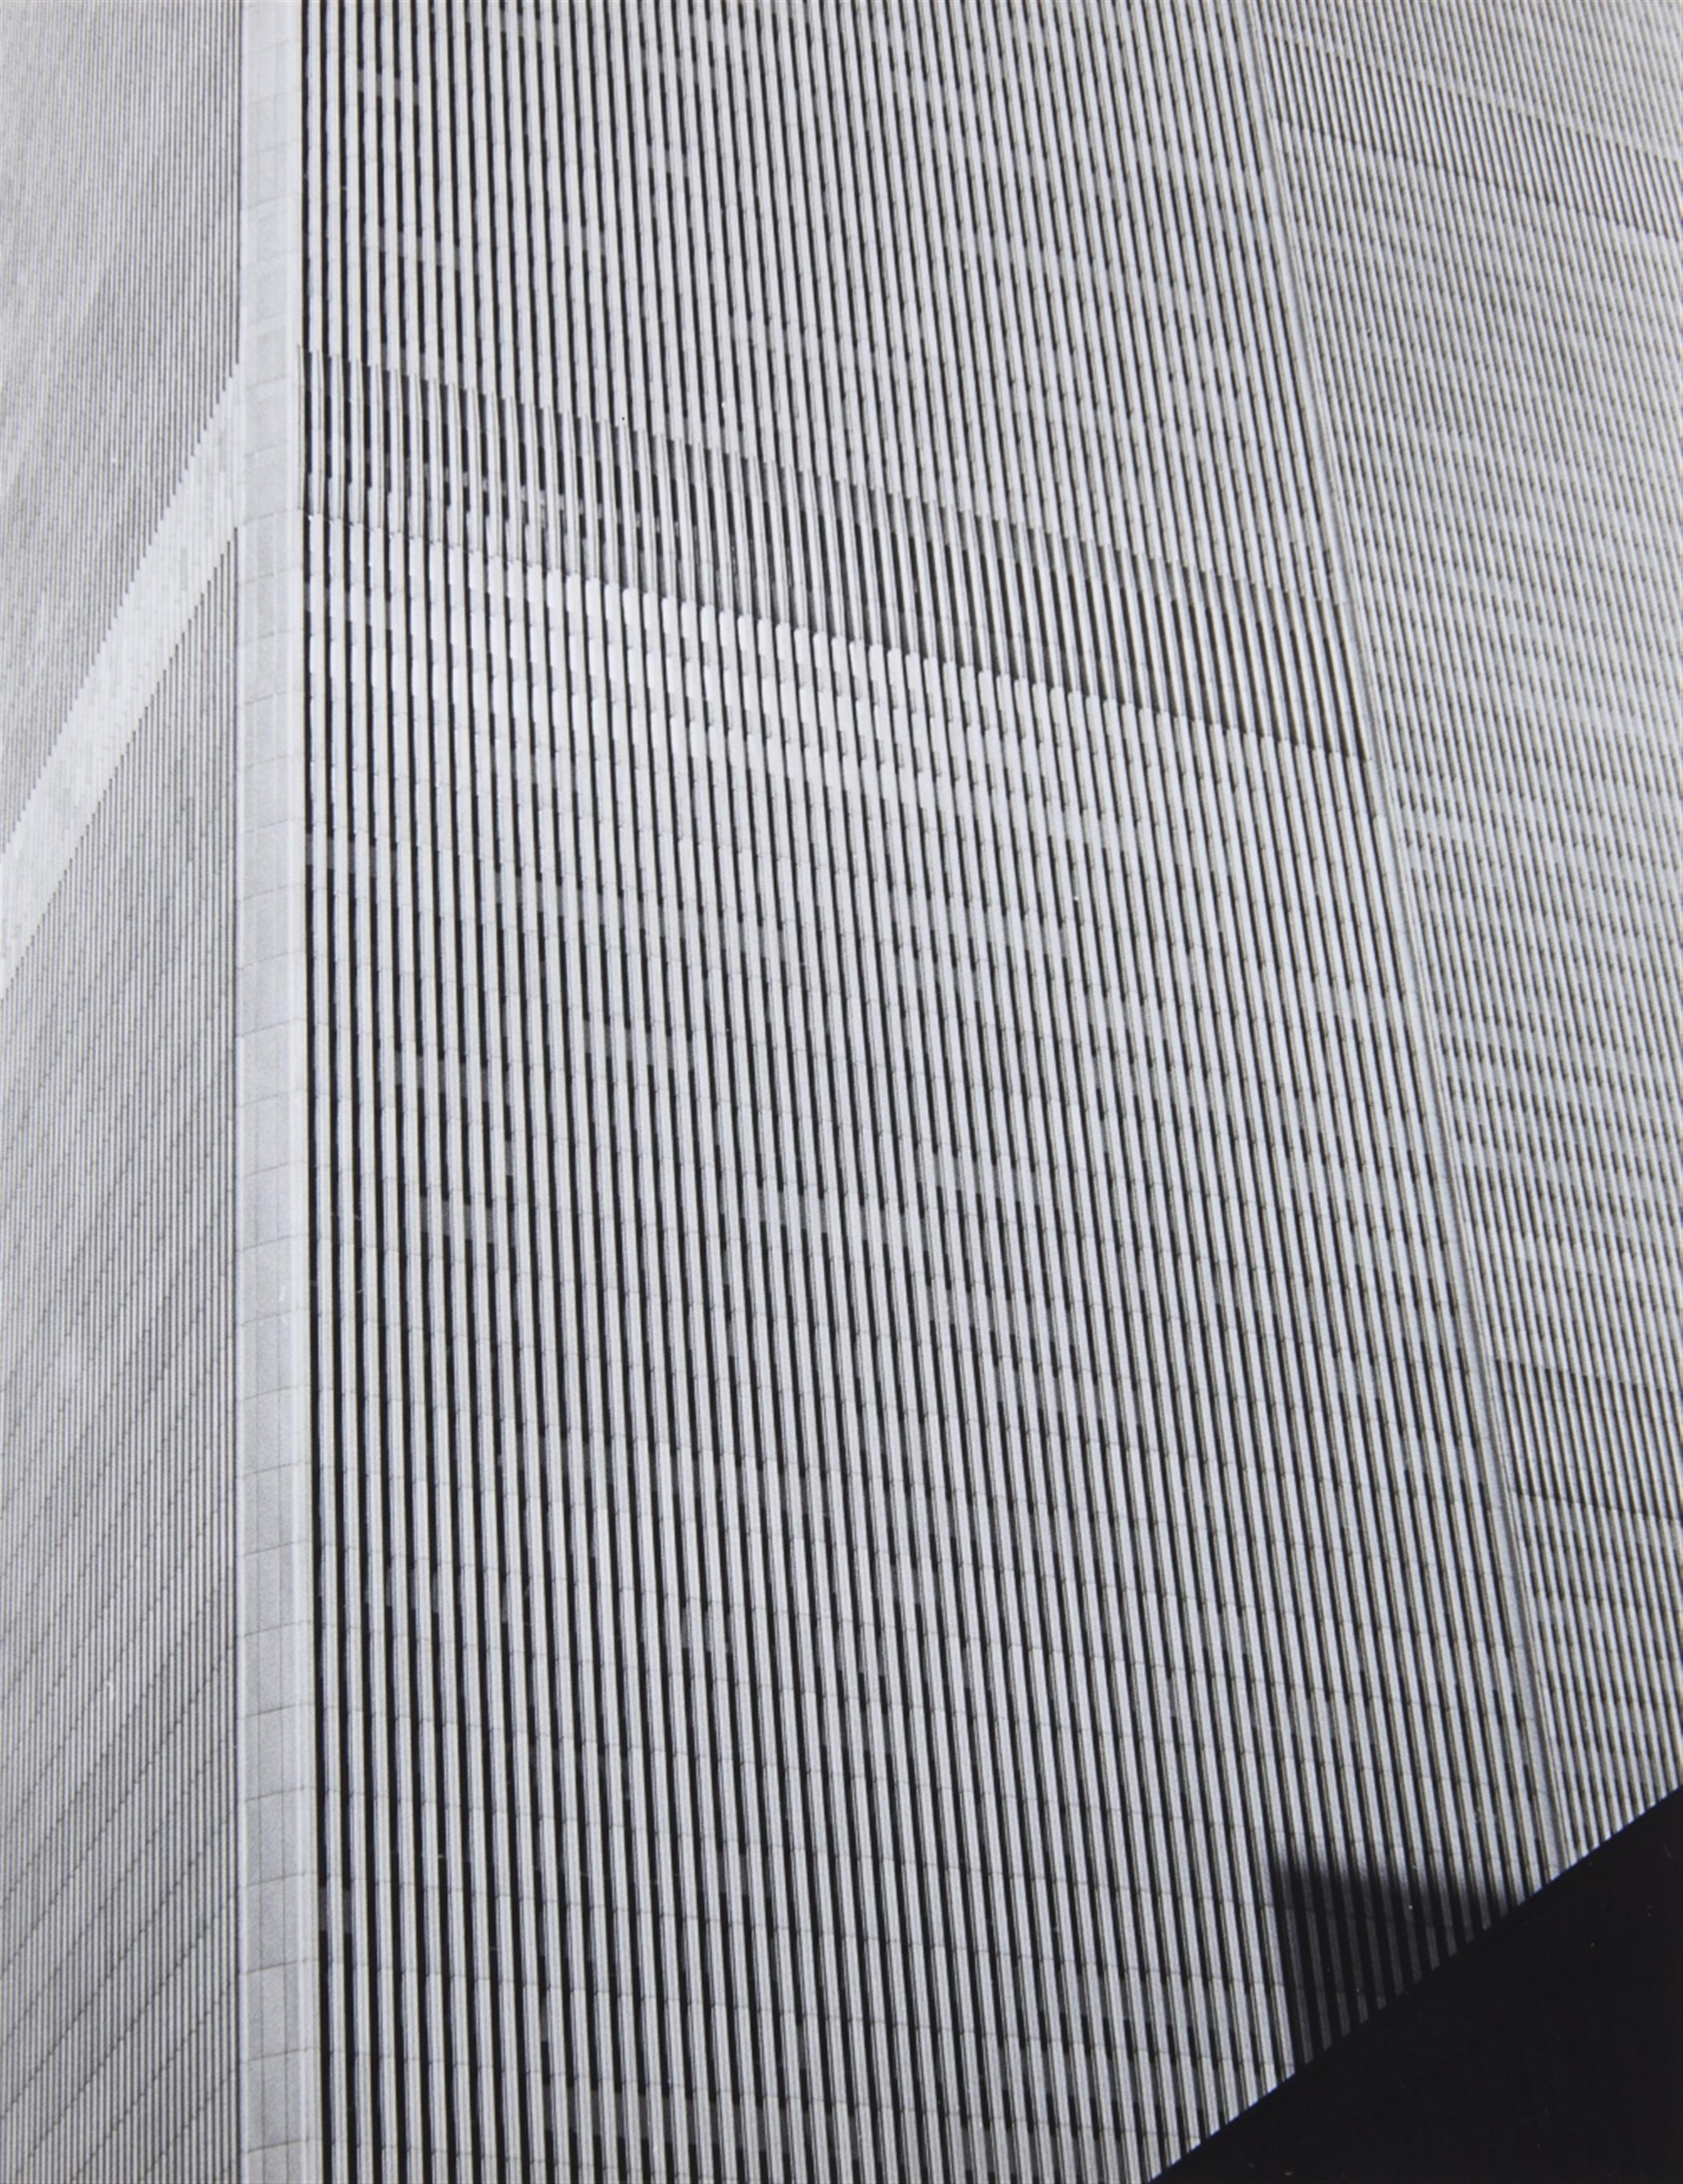 Andreas Feininger - Untitled - image-1